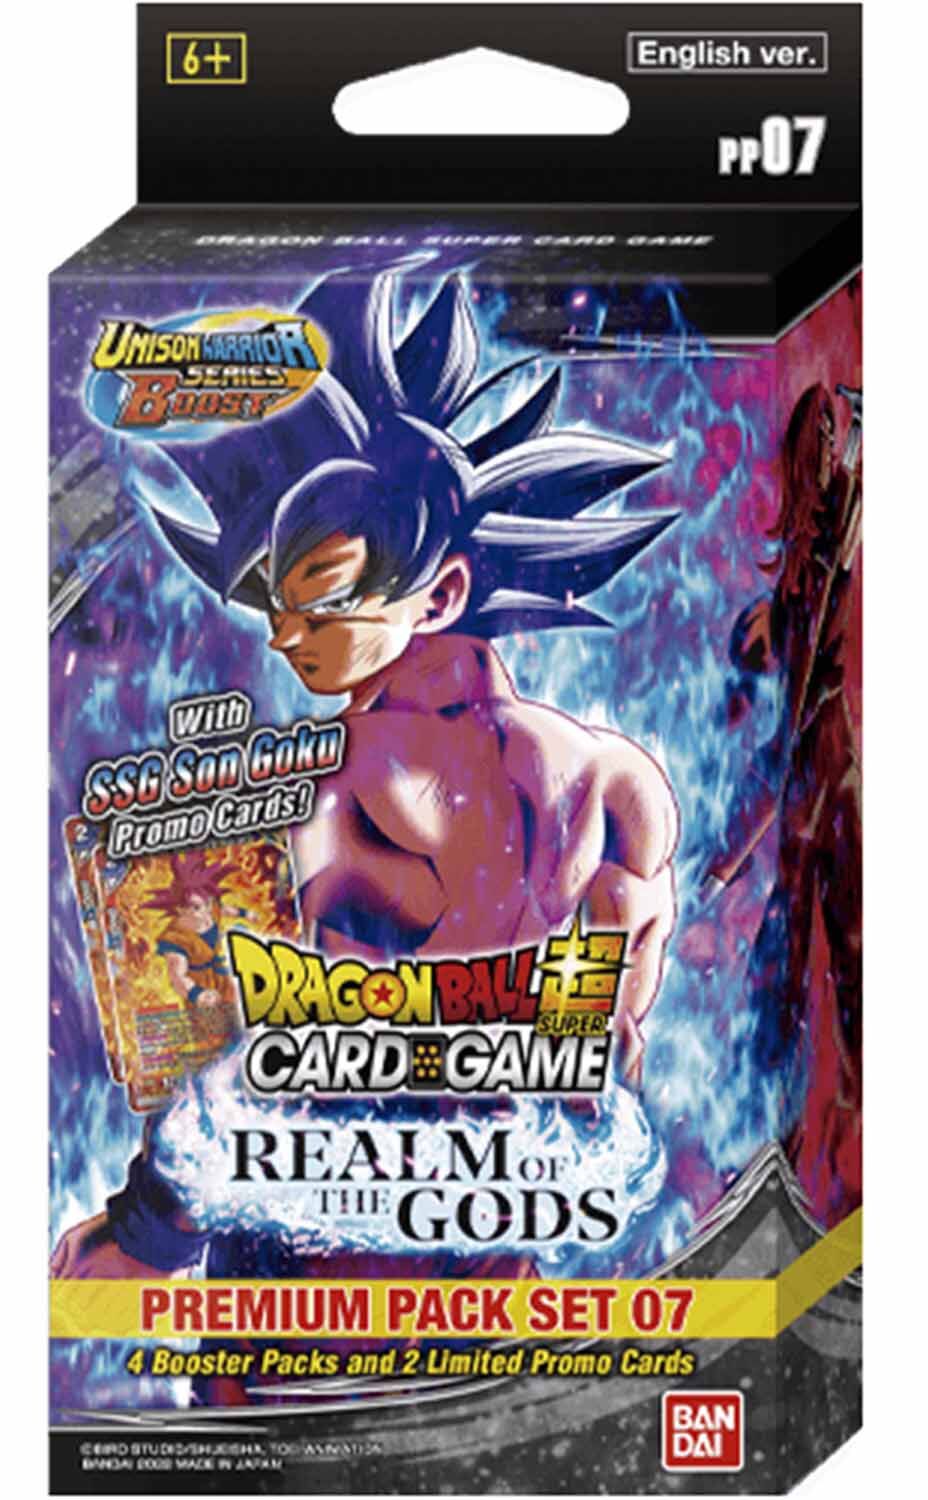 Real of the Gods Premium Pack 7 PP07 - Dragon Ball Super Card Game - EN